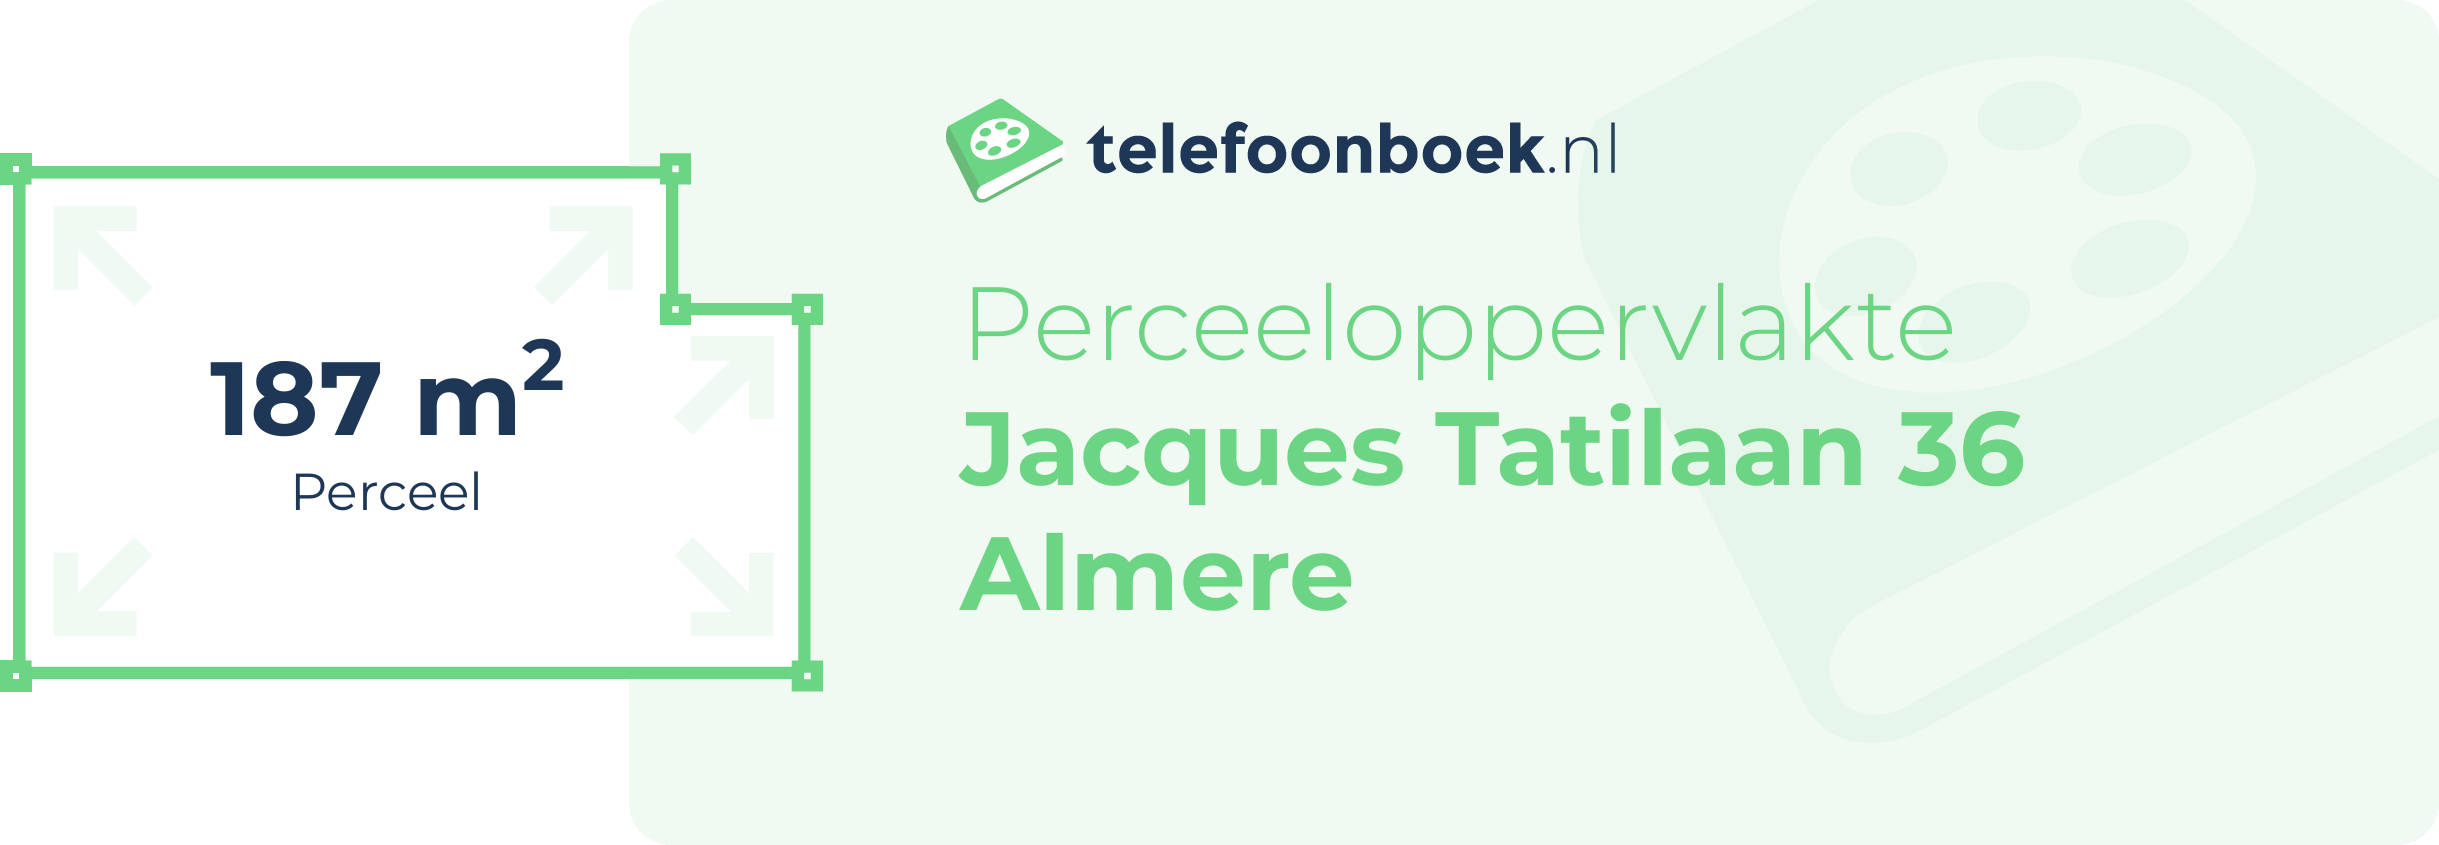 Perceeloppervlakte Jacques Tatilaan 36 Almere